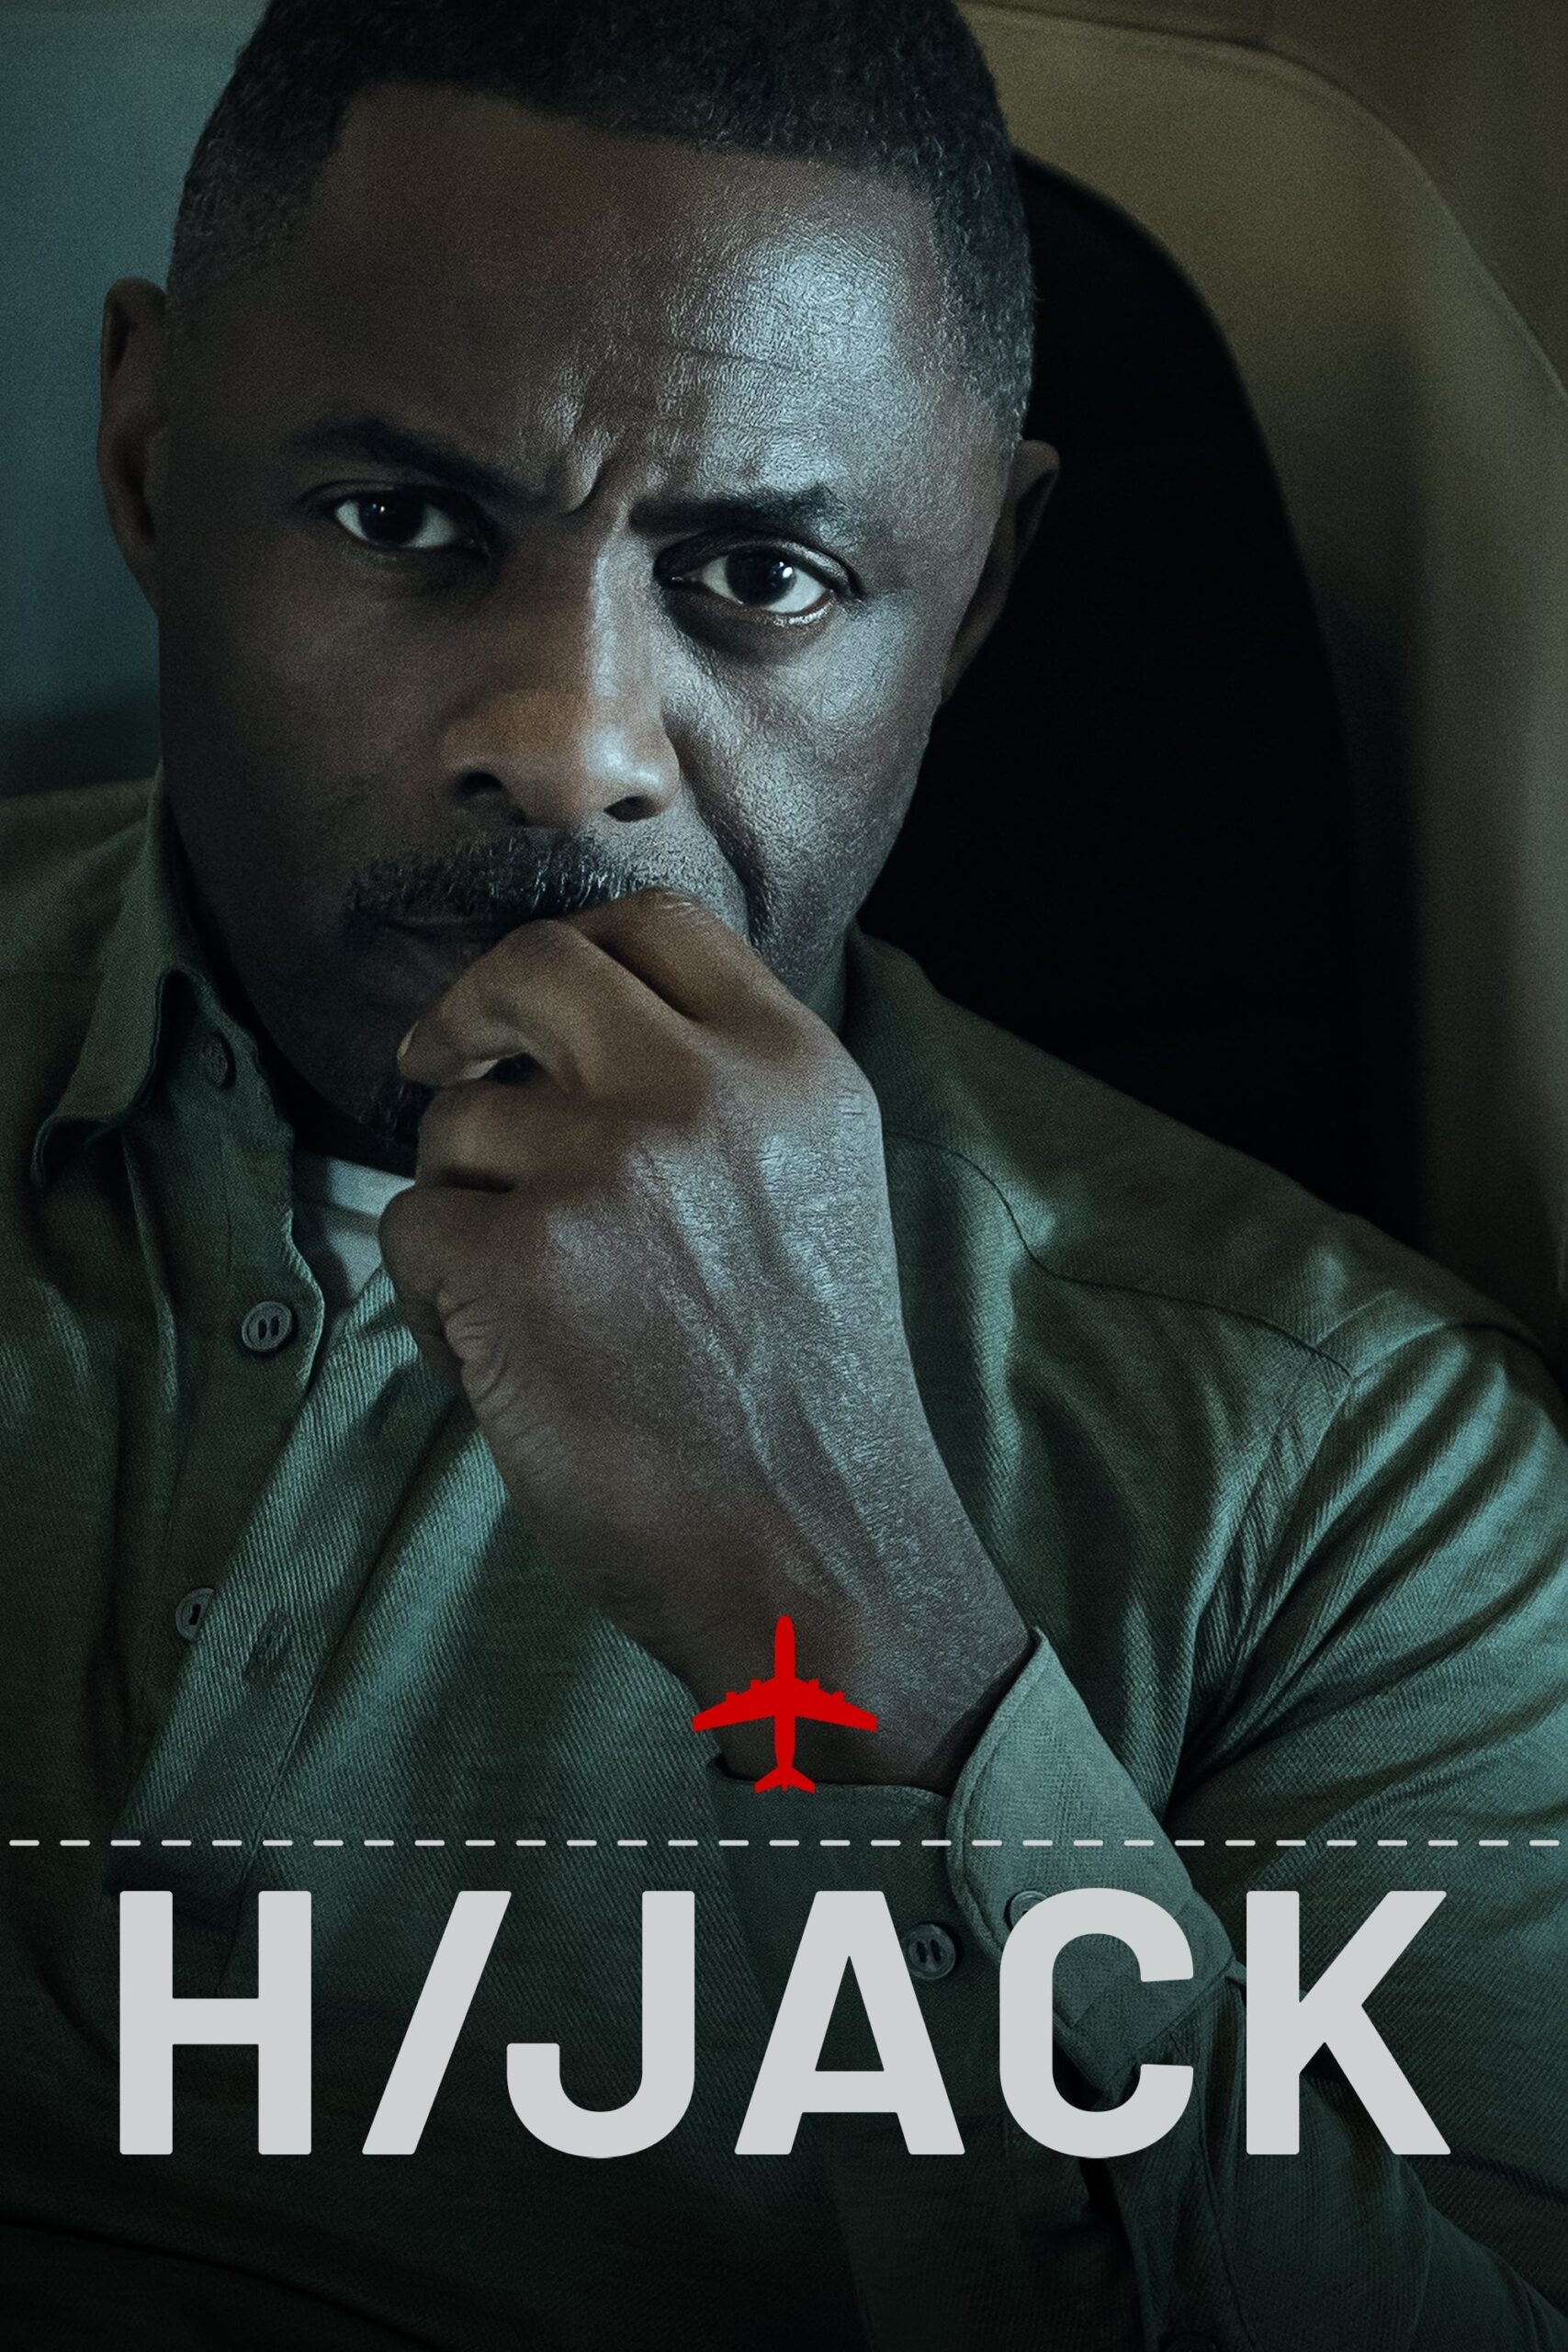 Hijack poster